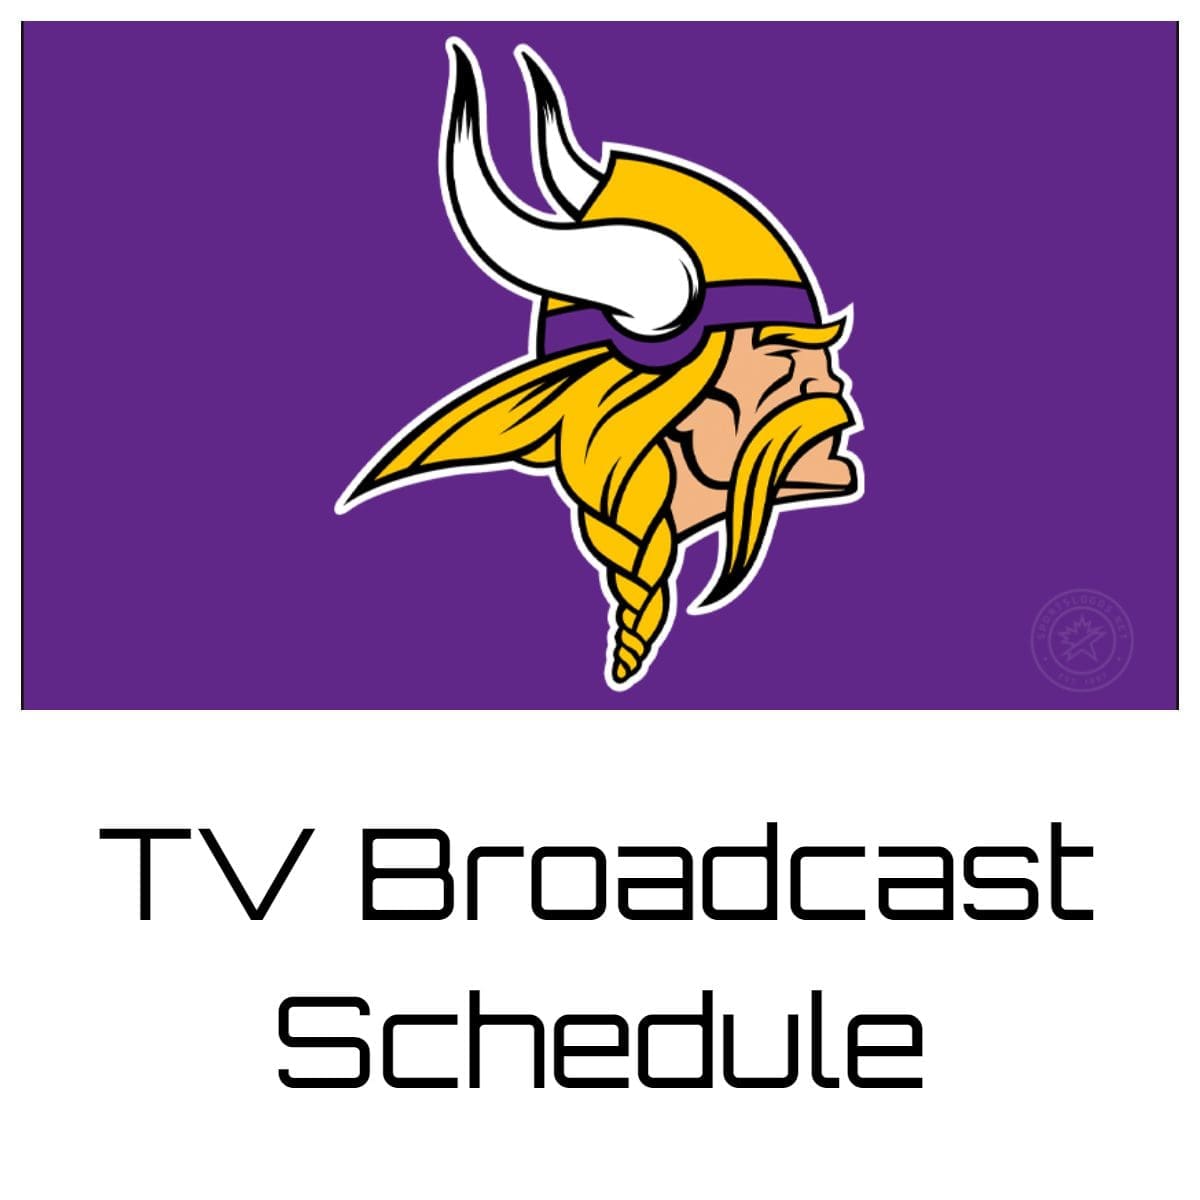 Minnesota Vikings TV Broadcast Schedule